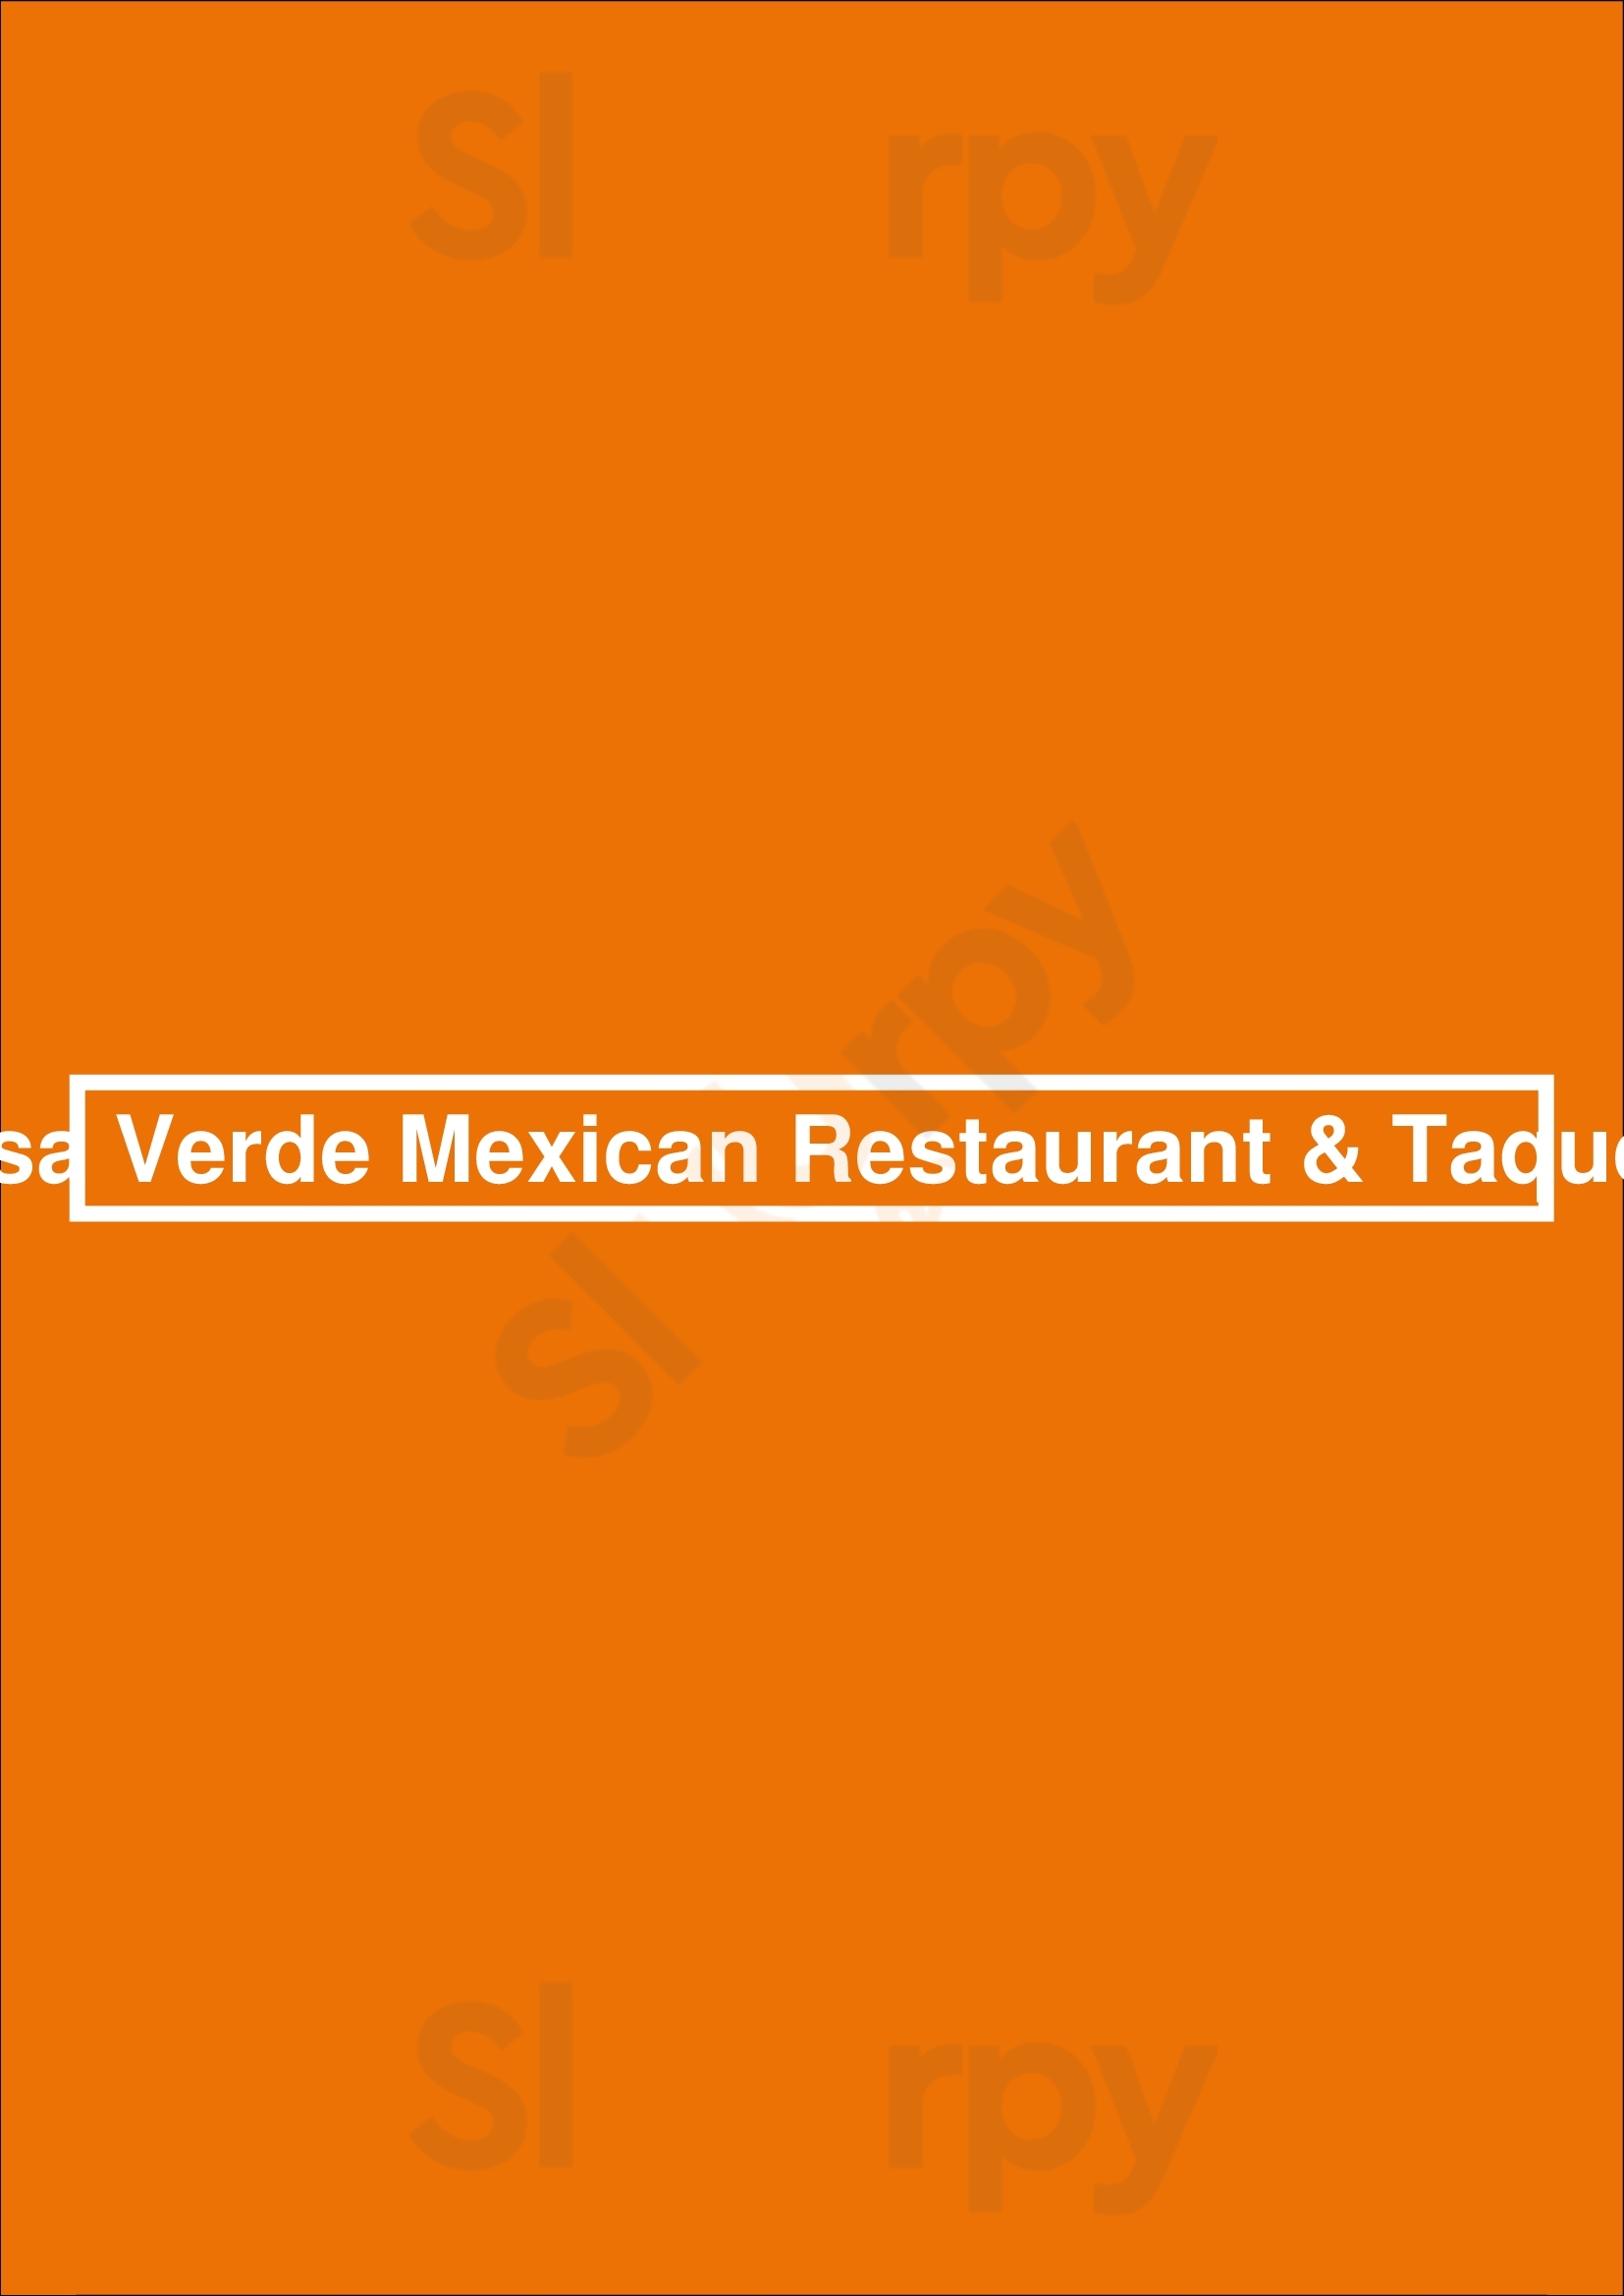 Salsa Verde Mexican Restaurant & Taqueria Indianapolis Menu - 1